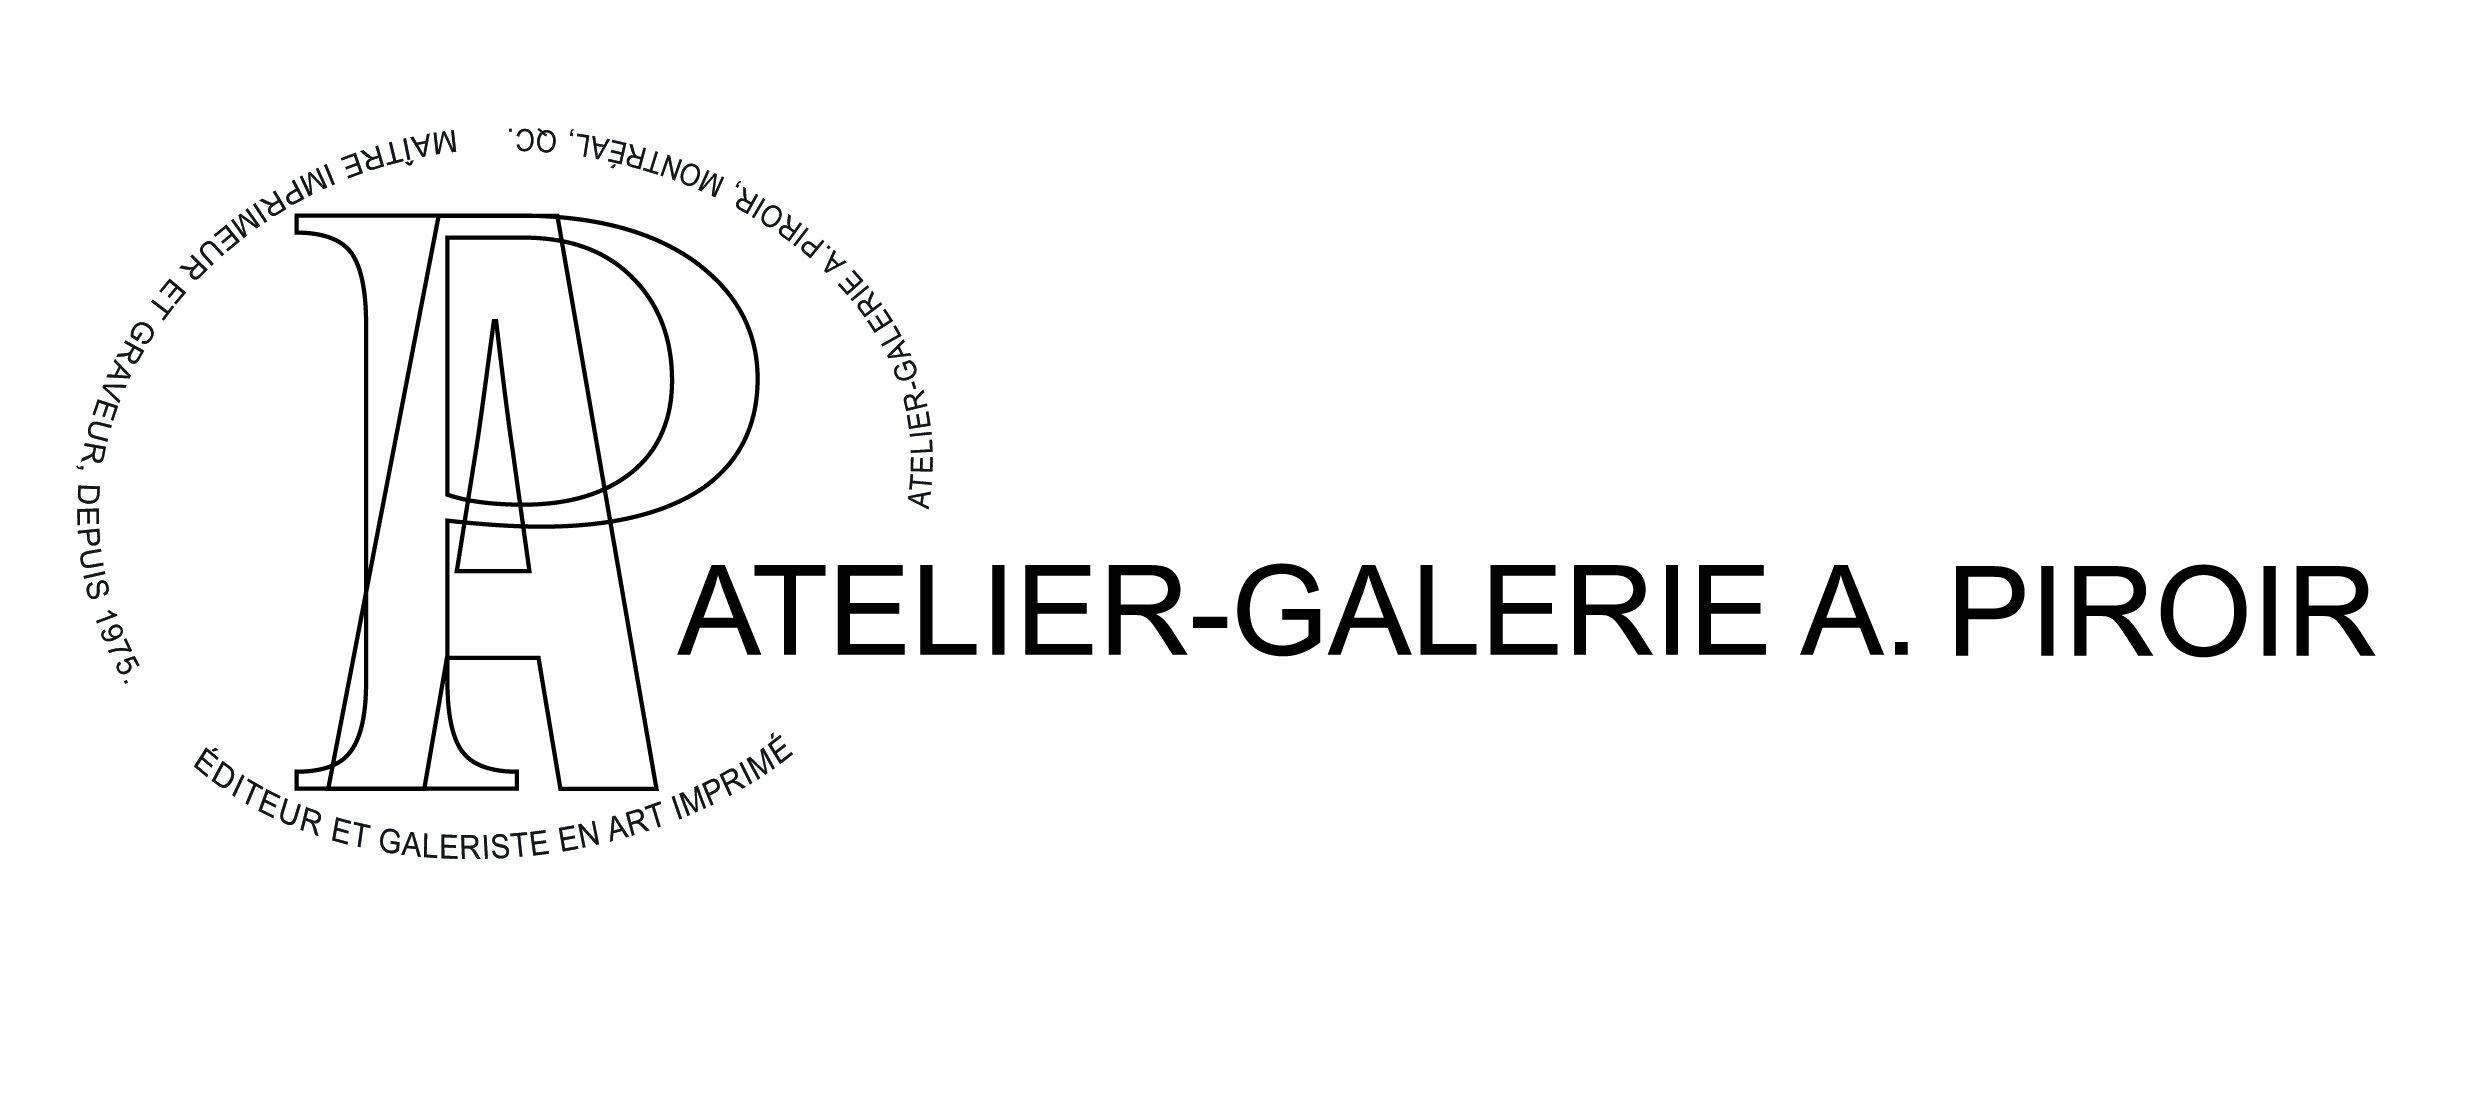 Atelier-Galerie A. Piroir